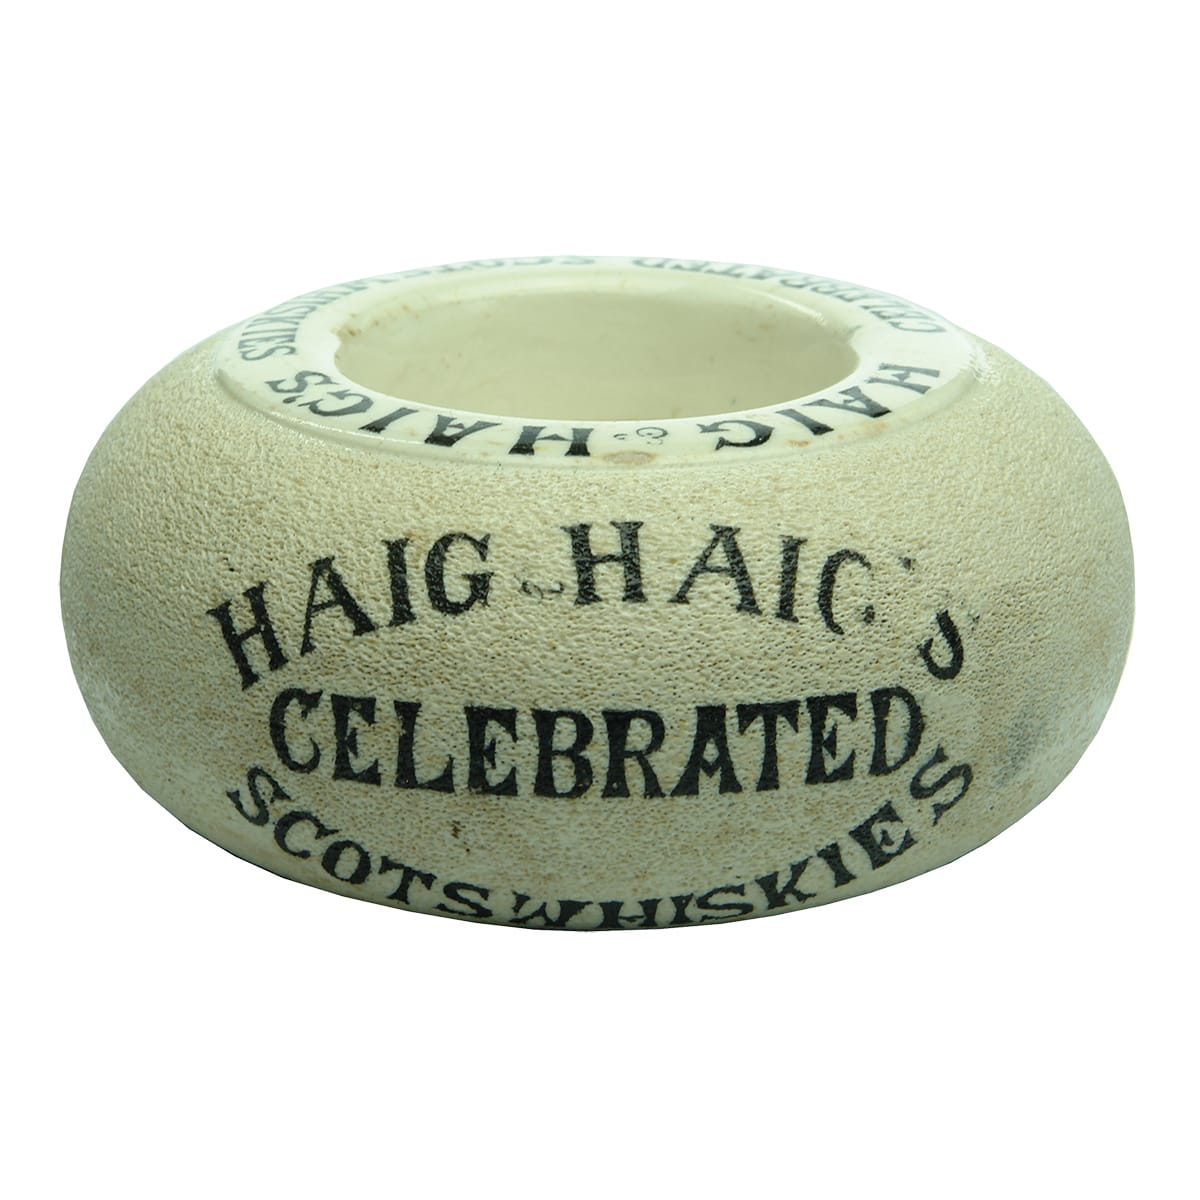 Advertising Match Striker. Haig & Haig's Celebrated Scots Whiskies.